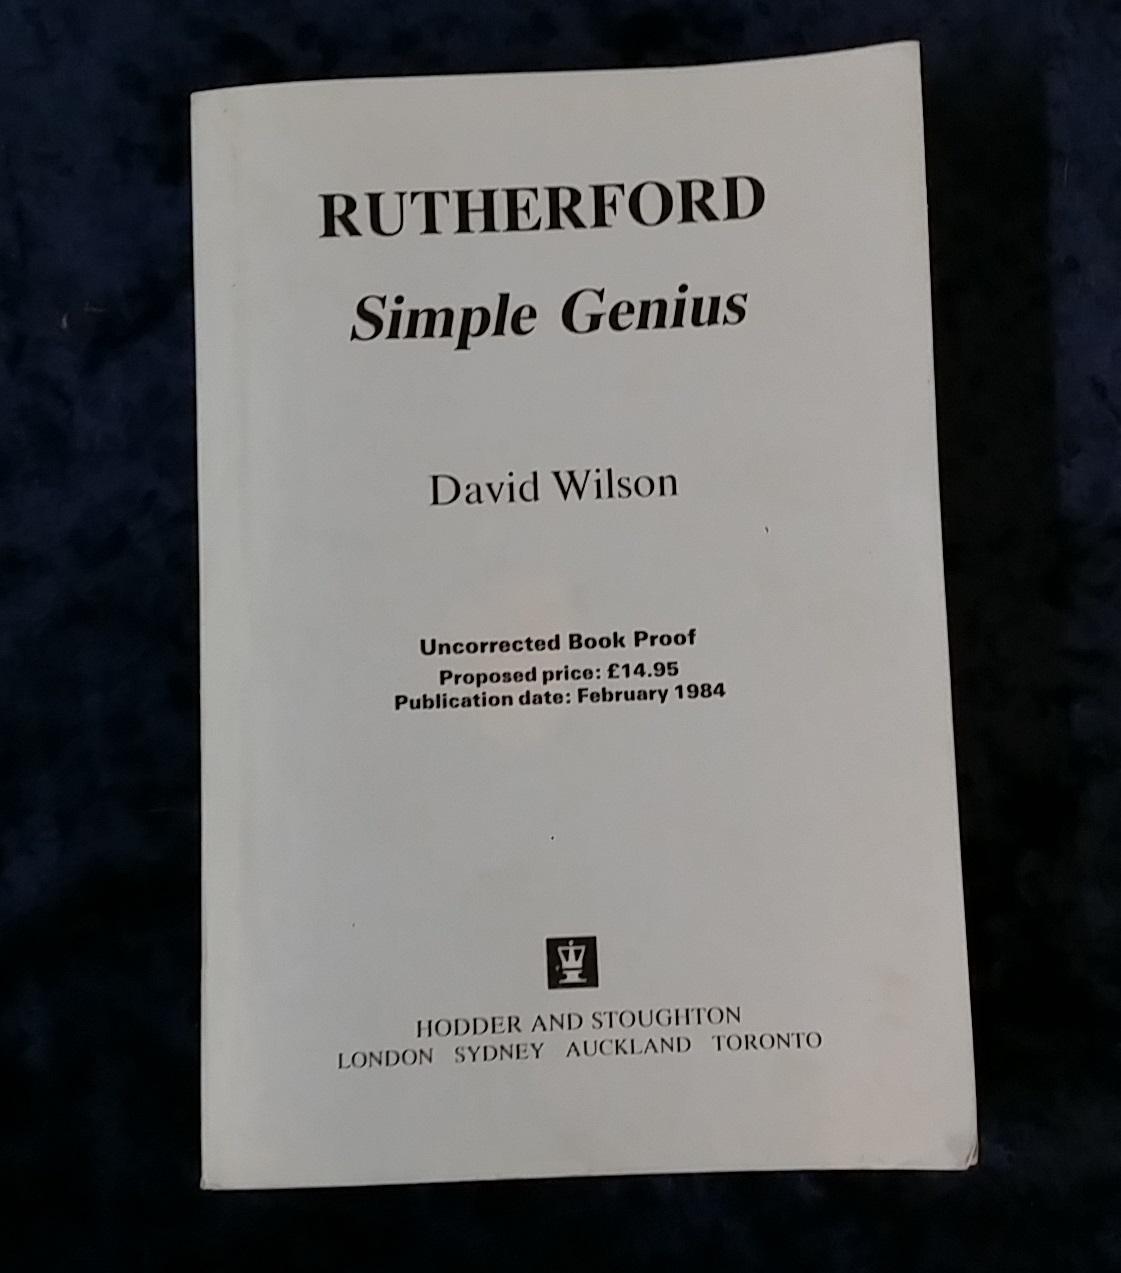 RUTHERFORD SIMPLE GENIUS - DAVID WILSON